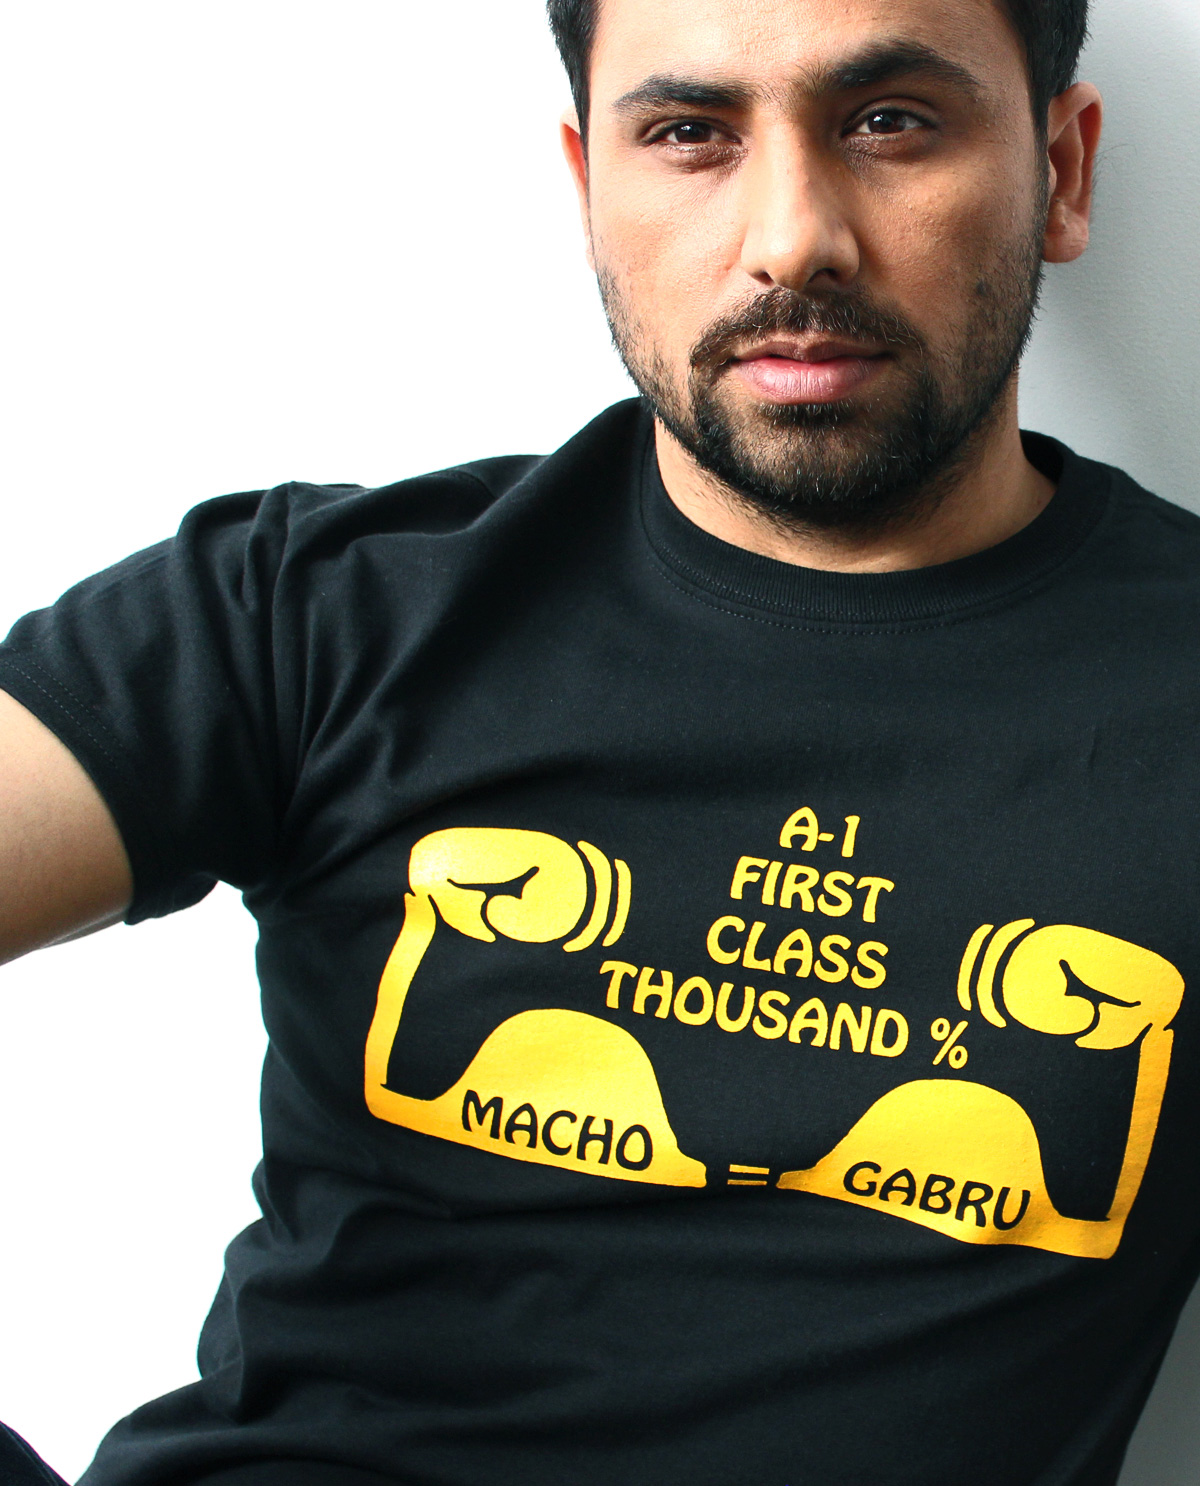 Macho Grabru graphic design t.shirt being worn by South Asian male model. South Asian Desi Themed Graphic Design t.shirts by Brown Man Clothing Co.